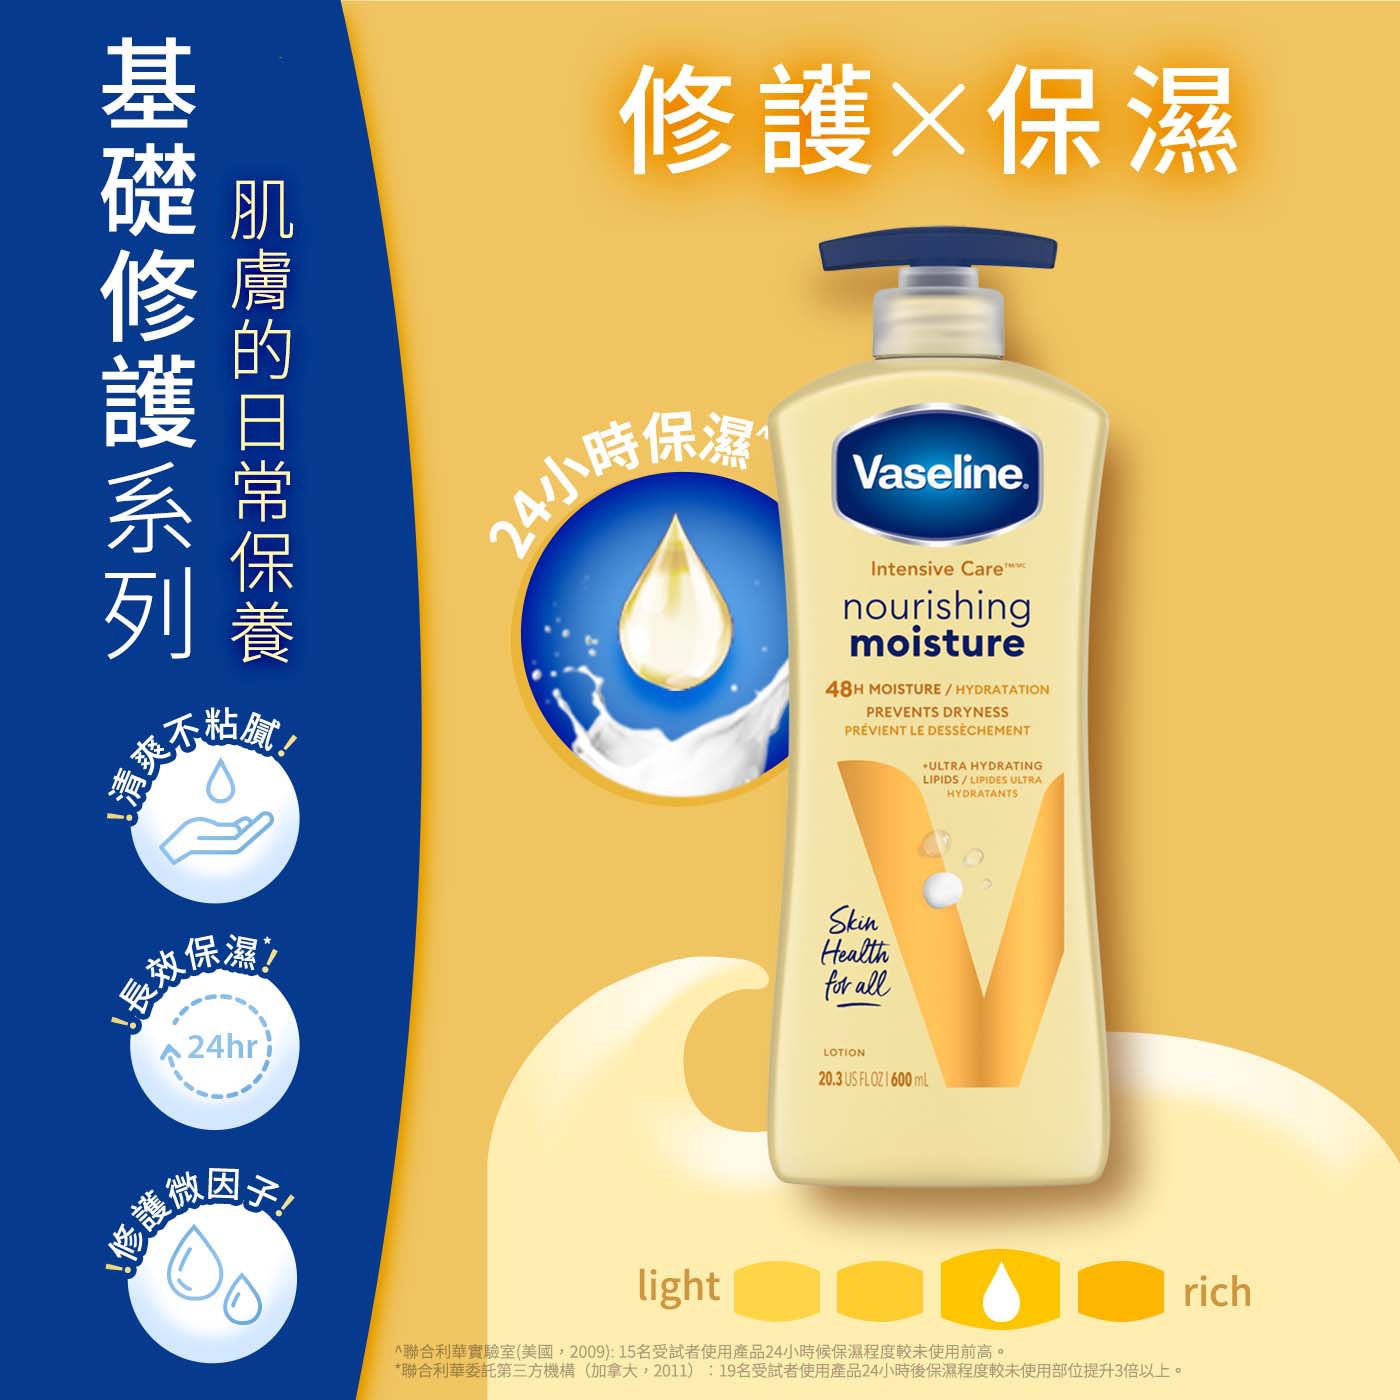 Vaseline 進口潤膚乳液組美國製造原裝進口 